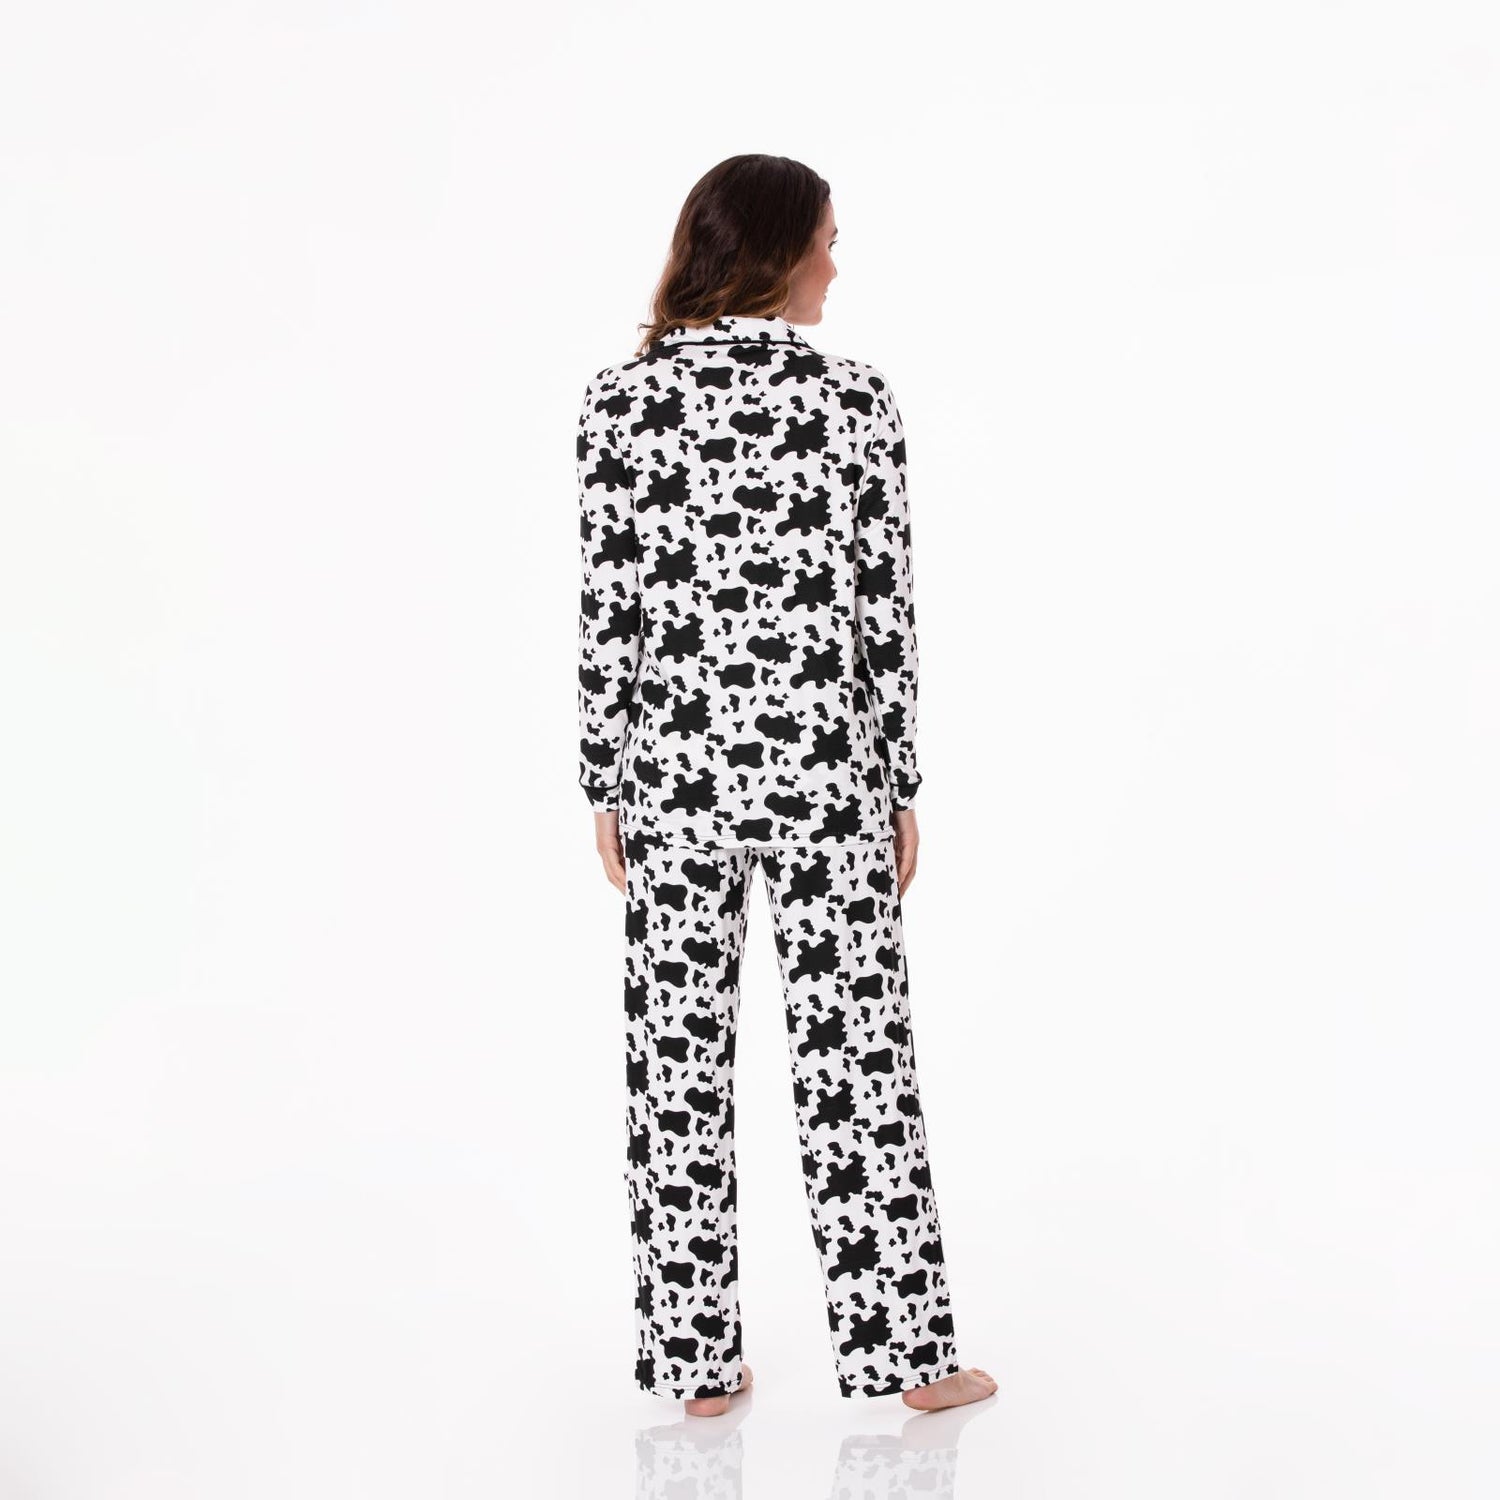 Women's Print Long Sleeve Collared Pajama Set in Cow Print